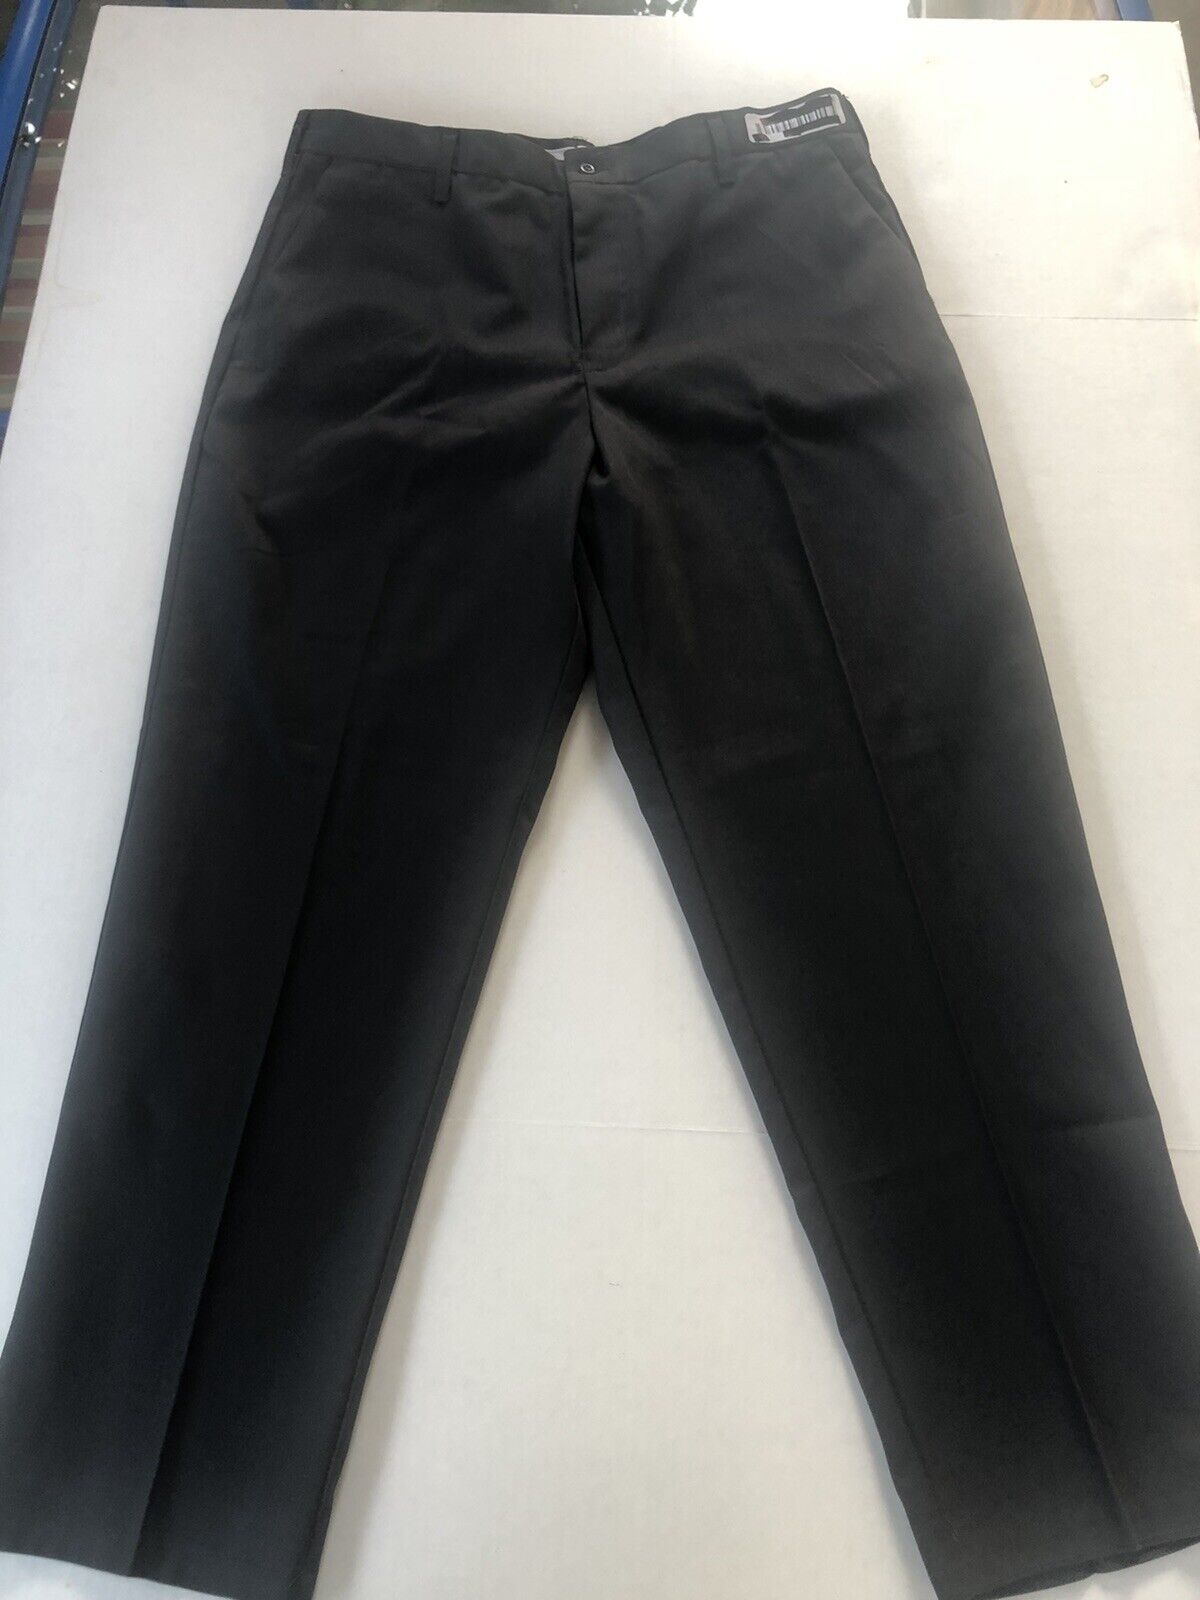 3 Cintas Comfort Flex Charcoal  Gray Work Pants Size 36x30 #945-33 cintas Does Not Apply - фотография #7